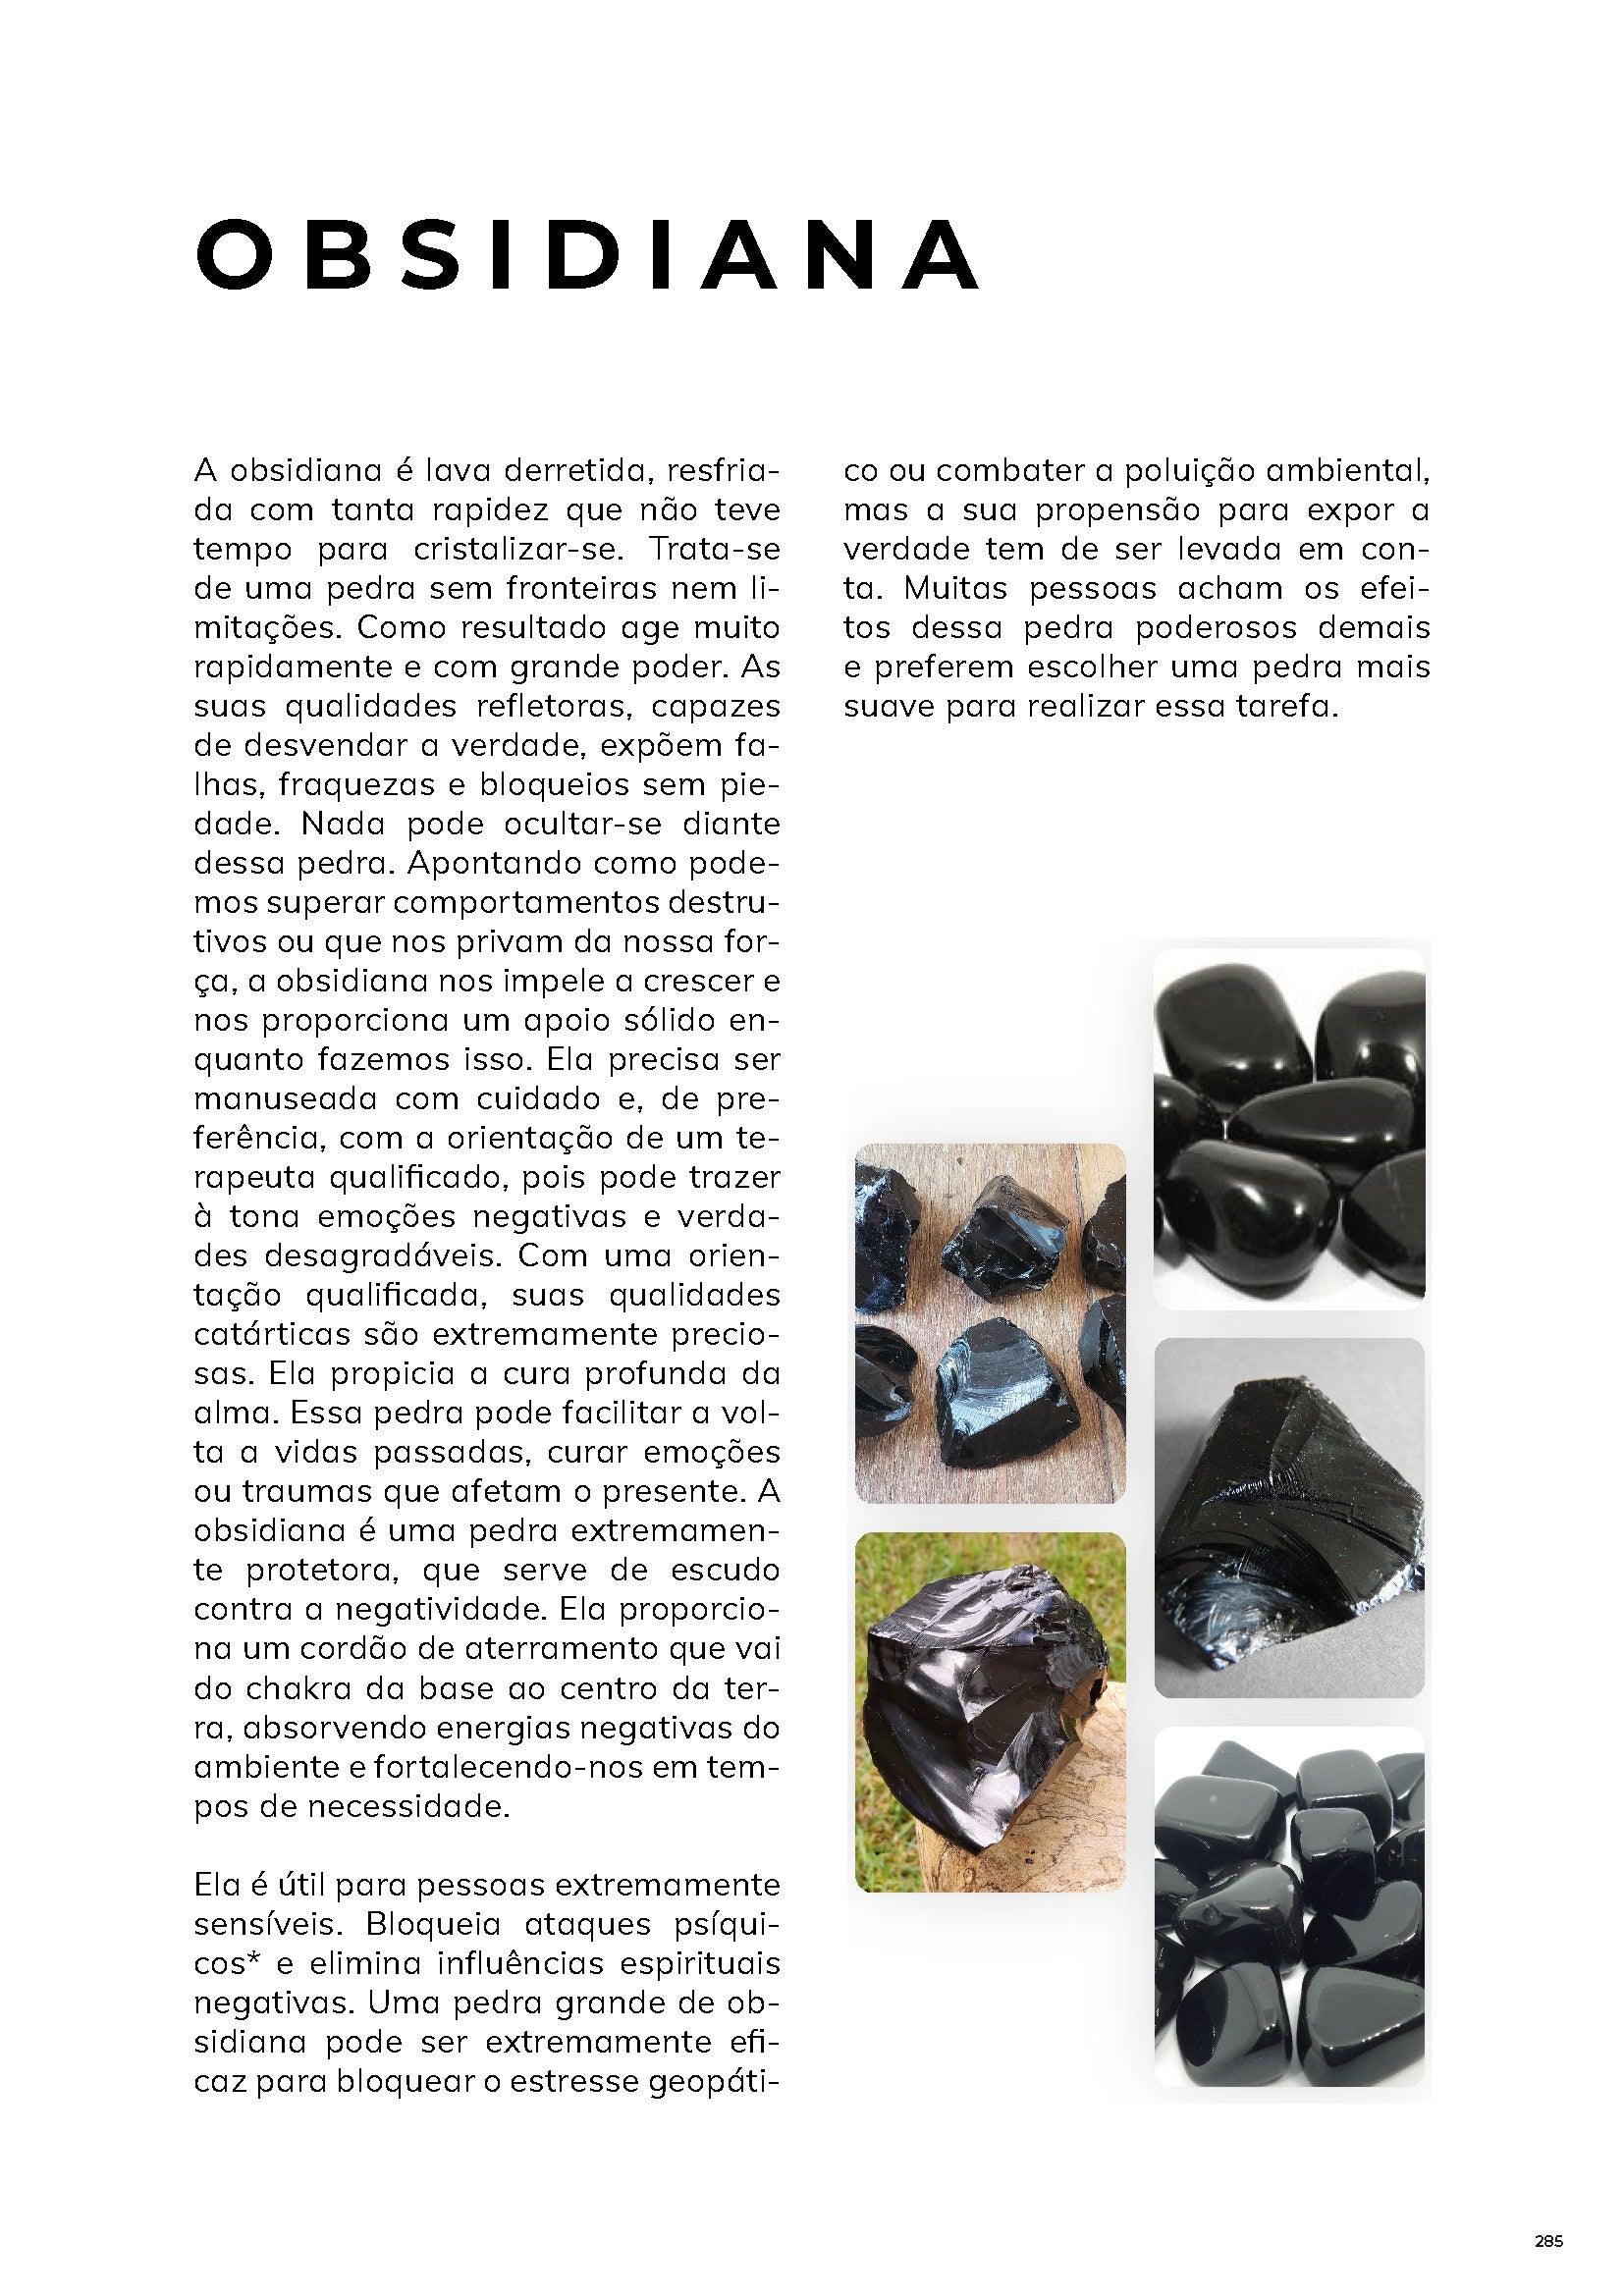 PDF Manual Completo do Terapeuta Holístico - IBRATH®️ - IBRATH Instituto Brasileiro de Terapias Holísticas bons, collection1um, original, todos